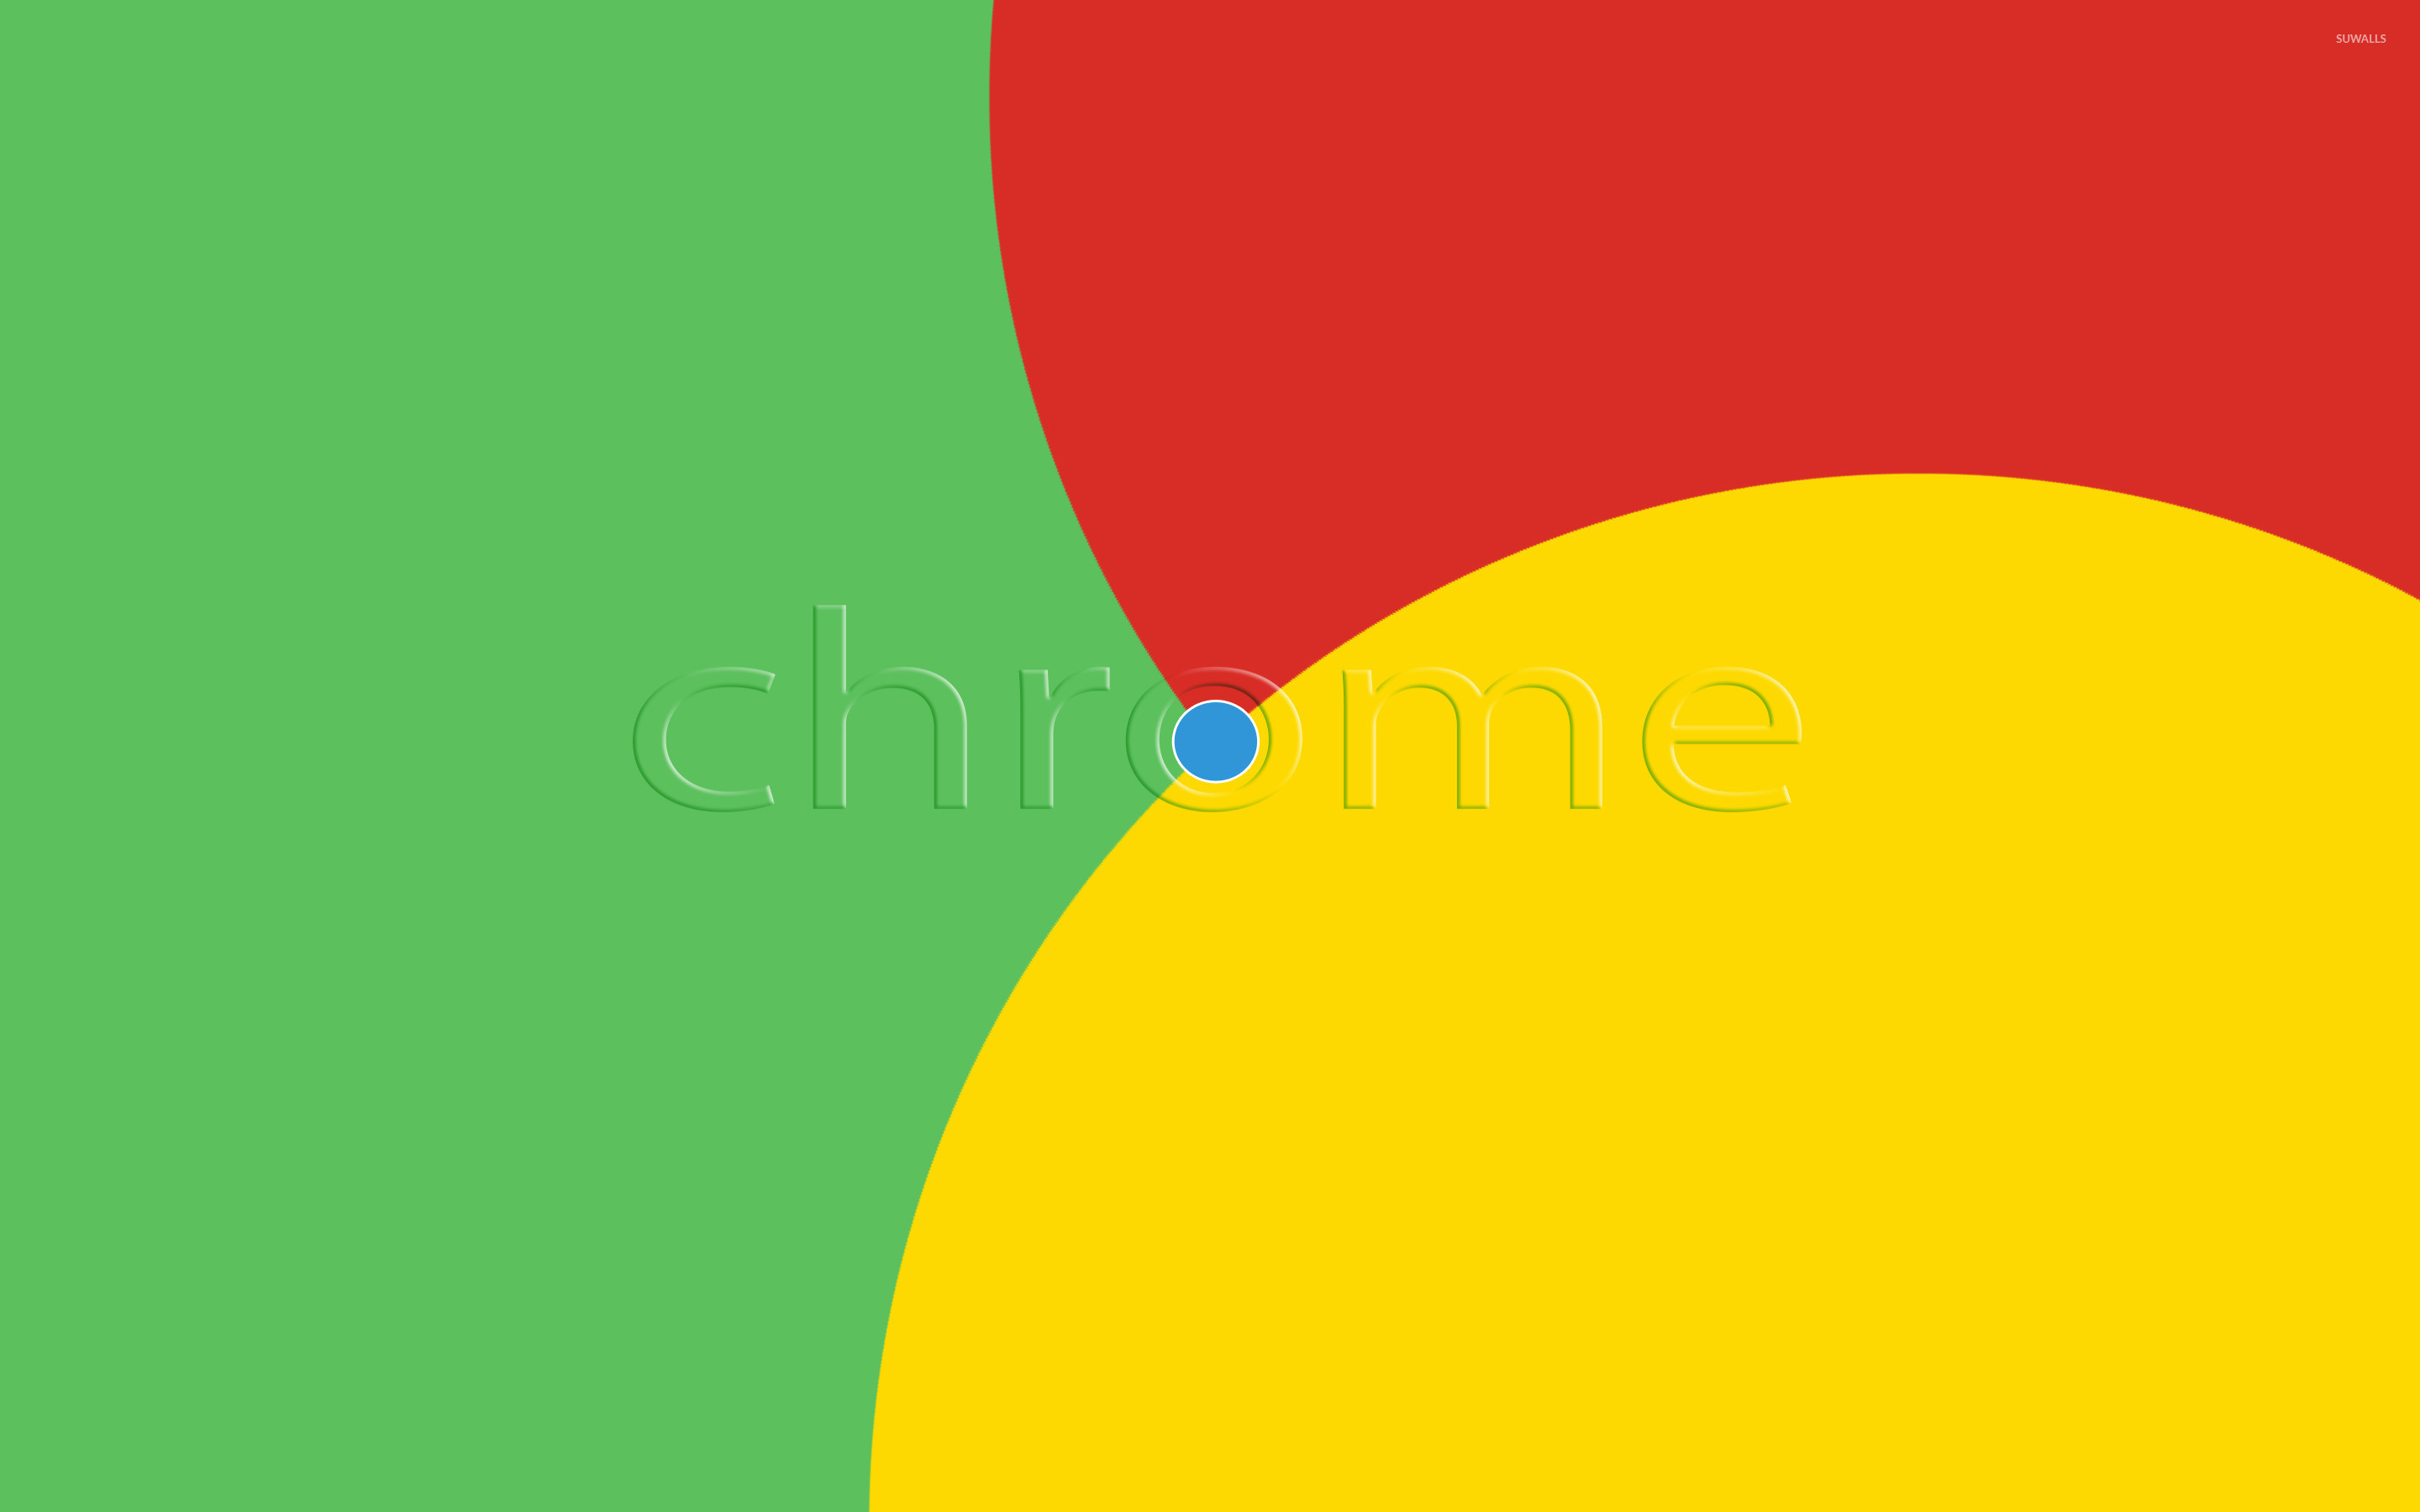 2880x1800 Chrome Wallpaper Free Download | HD Wallpapers | Pinterest | Google chrome,  Wallpaper and Hd wallpaper